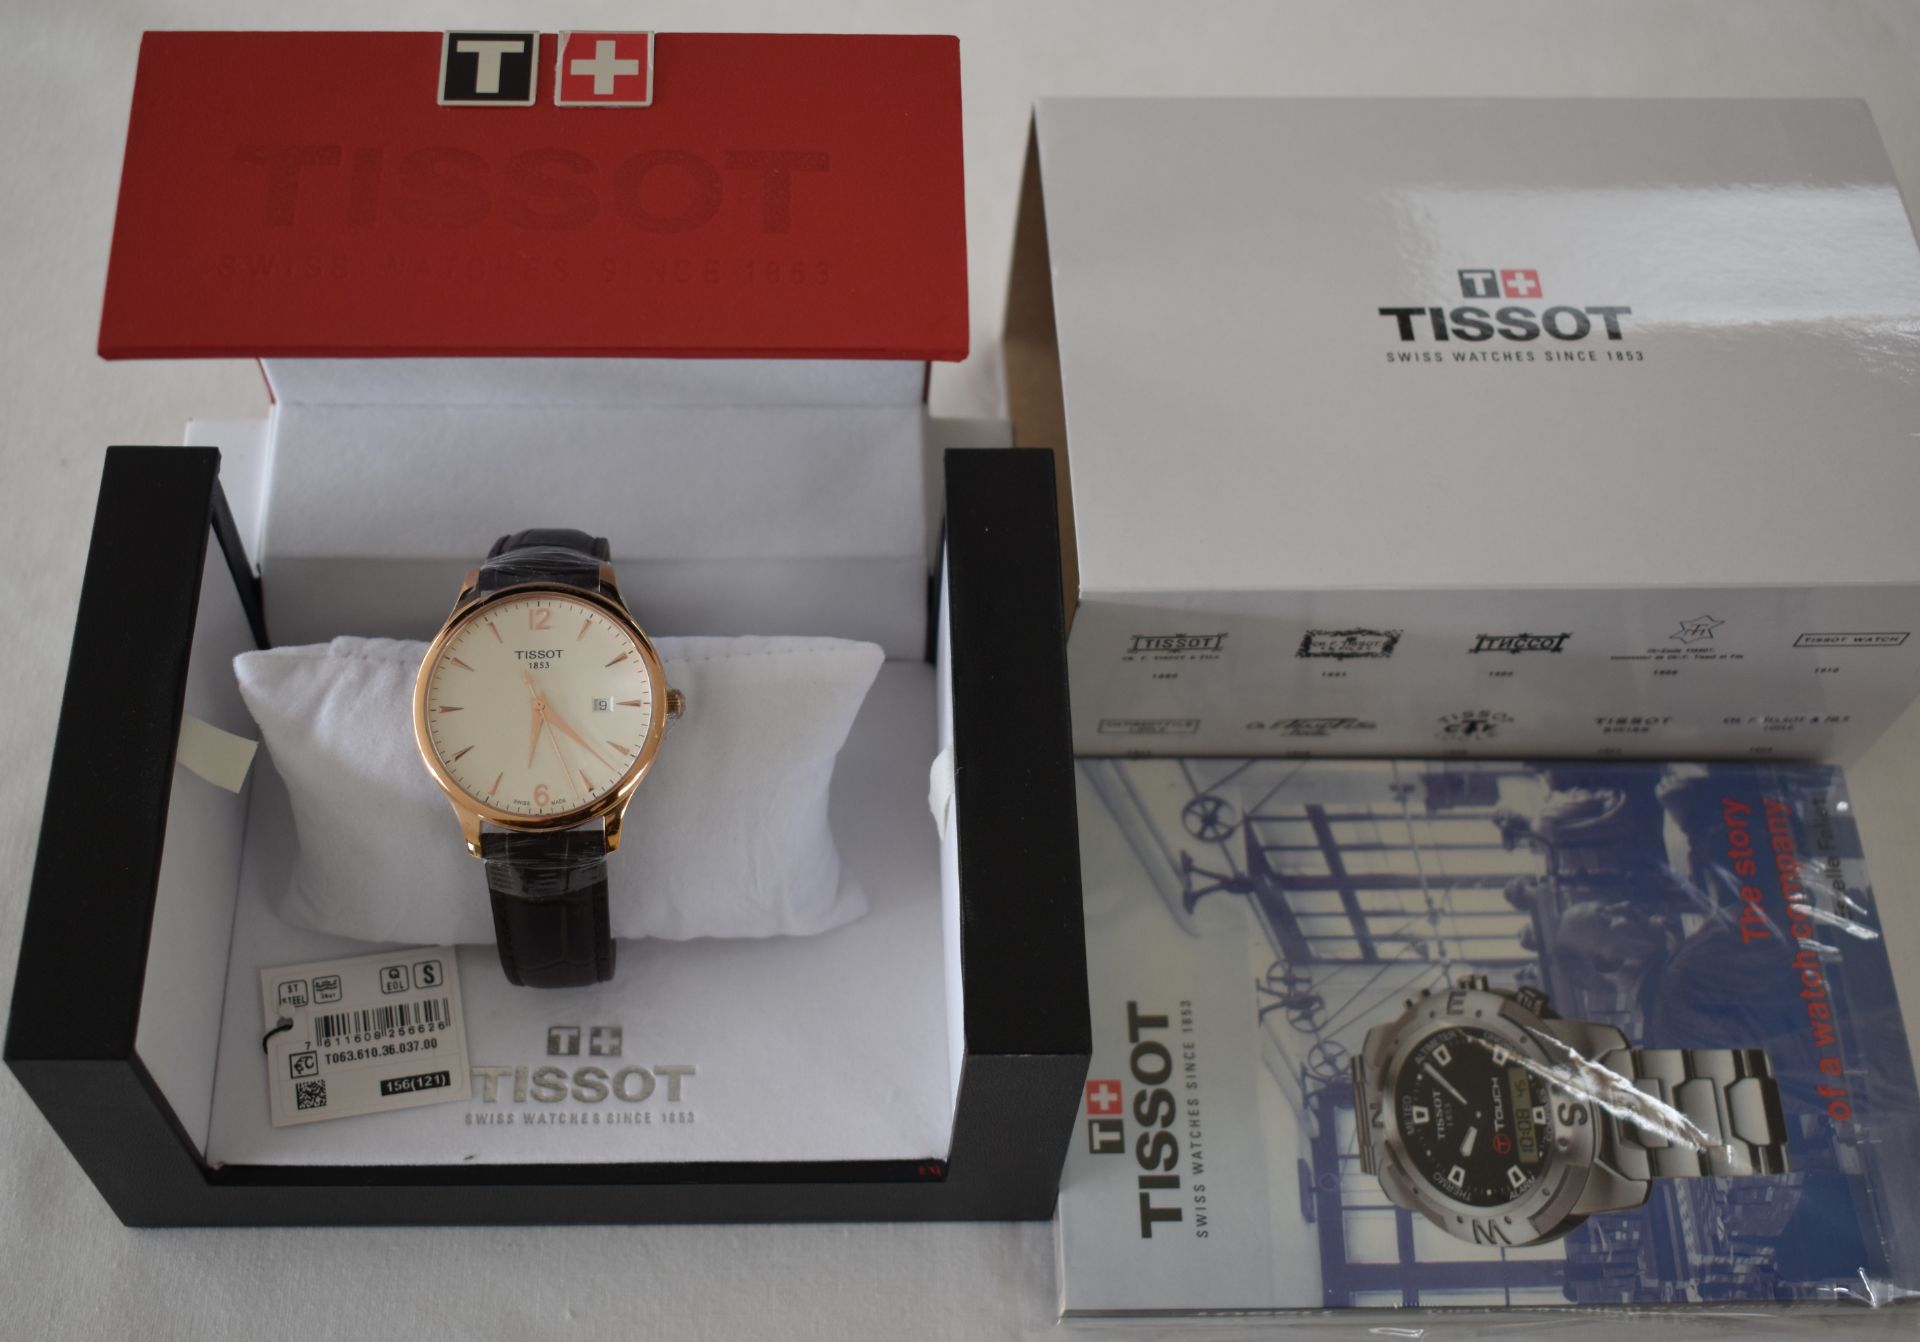 Tissot Men's watch TO63.610.36.037.00 - Image 2 of 2